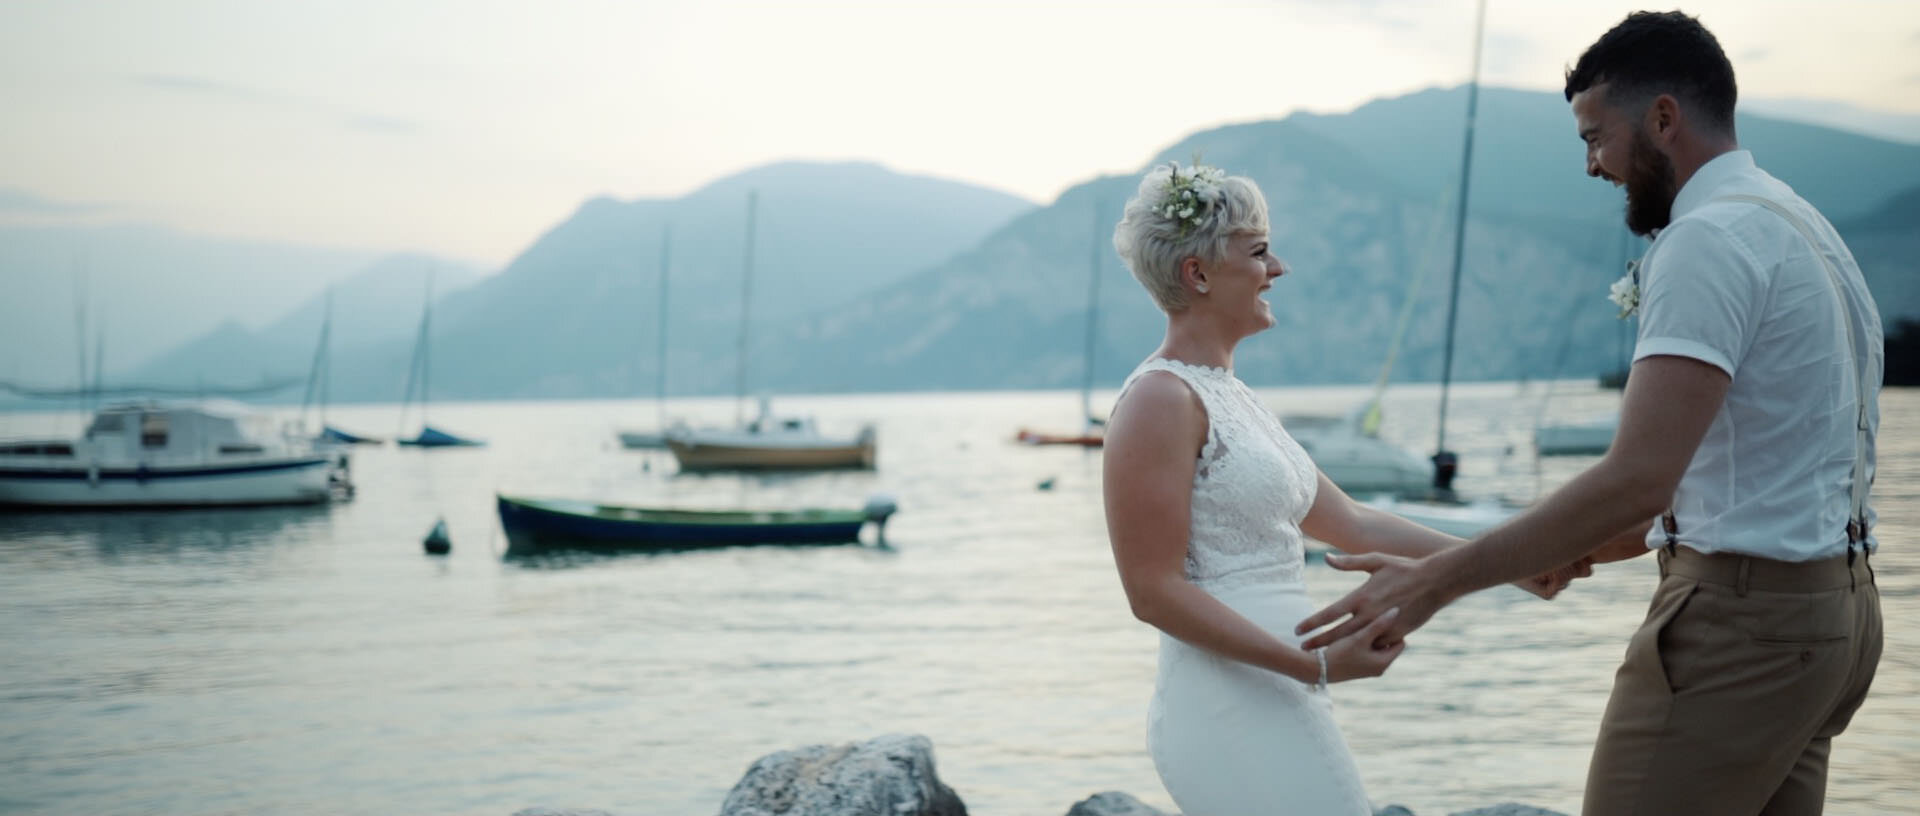 Emma & Tom Destination Wedding Film Video in Malcesine Italy 4.jpg